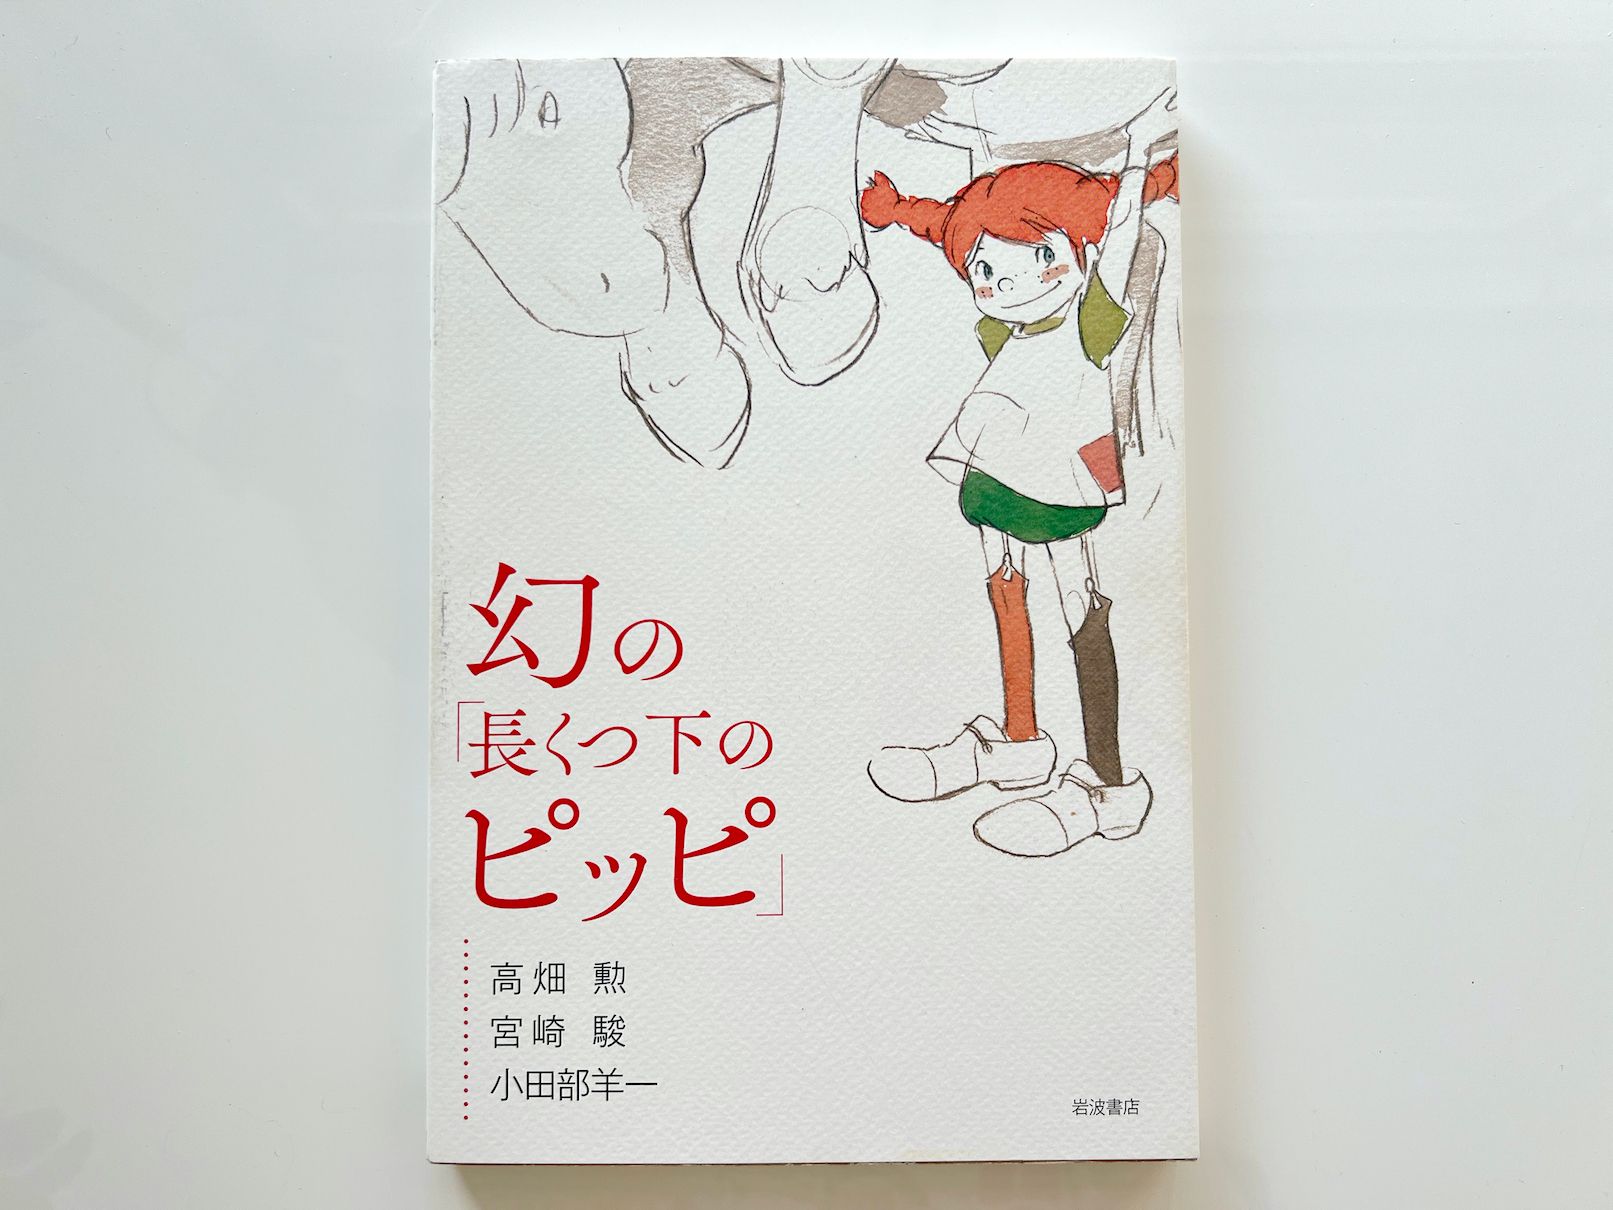 Ep. 2 Drawing What's Real - 10 Years with Hayao Miyazaki